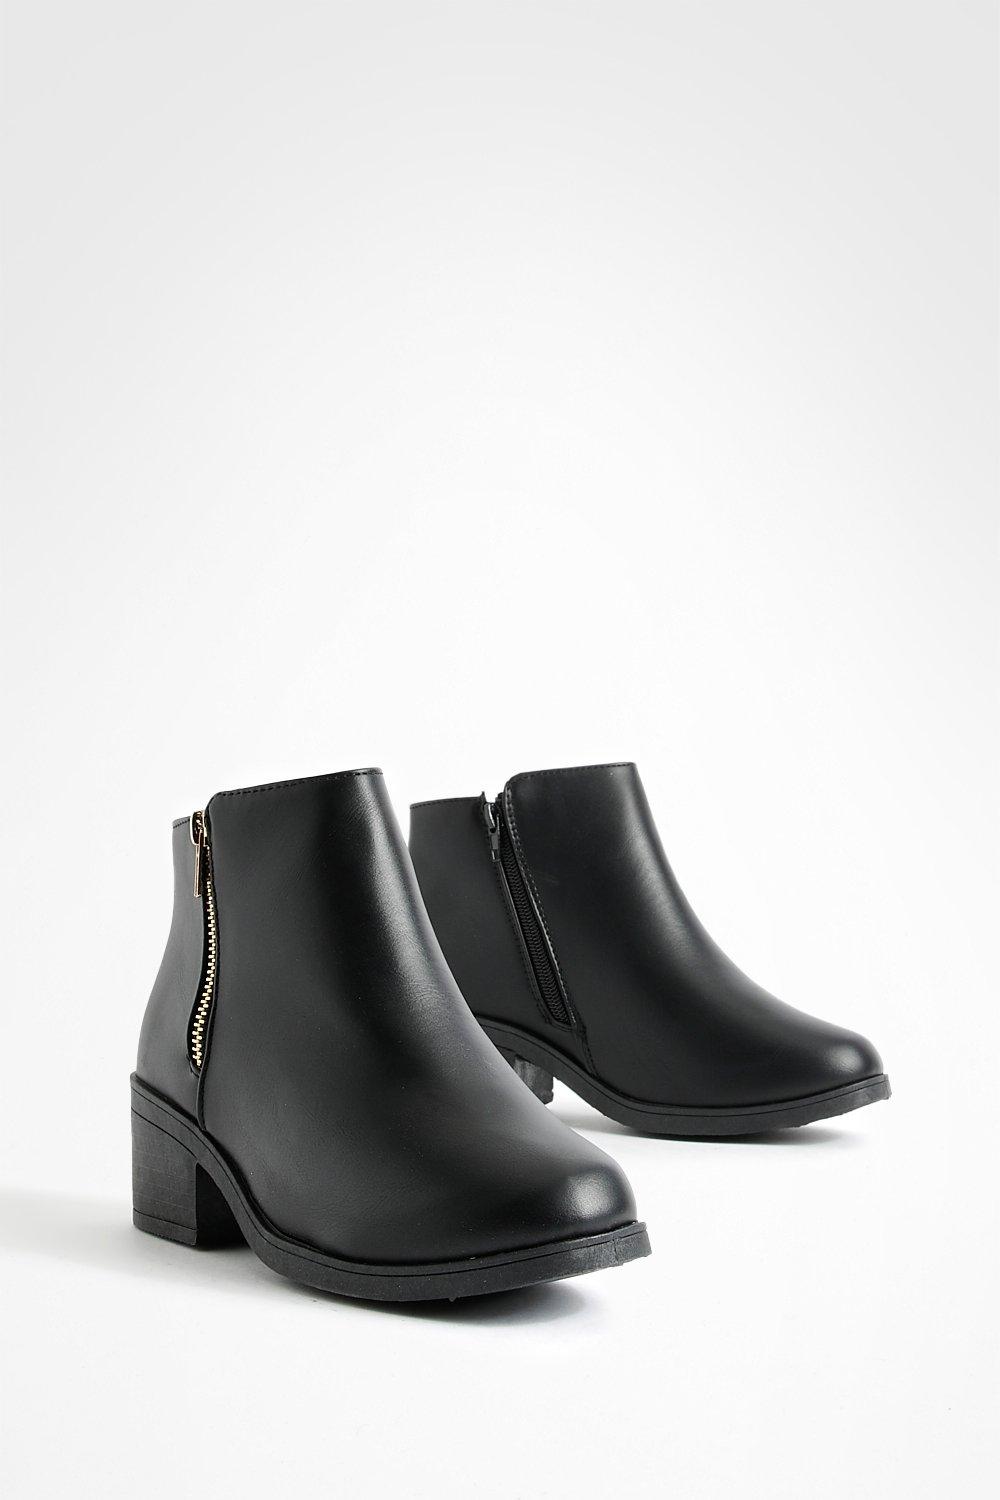 Womens Wide Fit Zip Side Chelsea Boots - Black - 3, Black